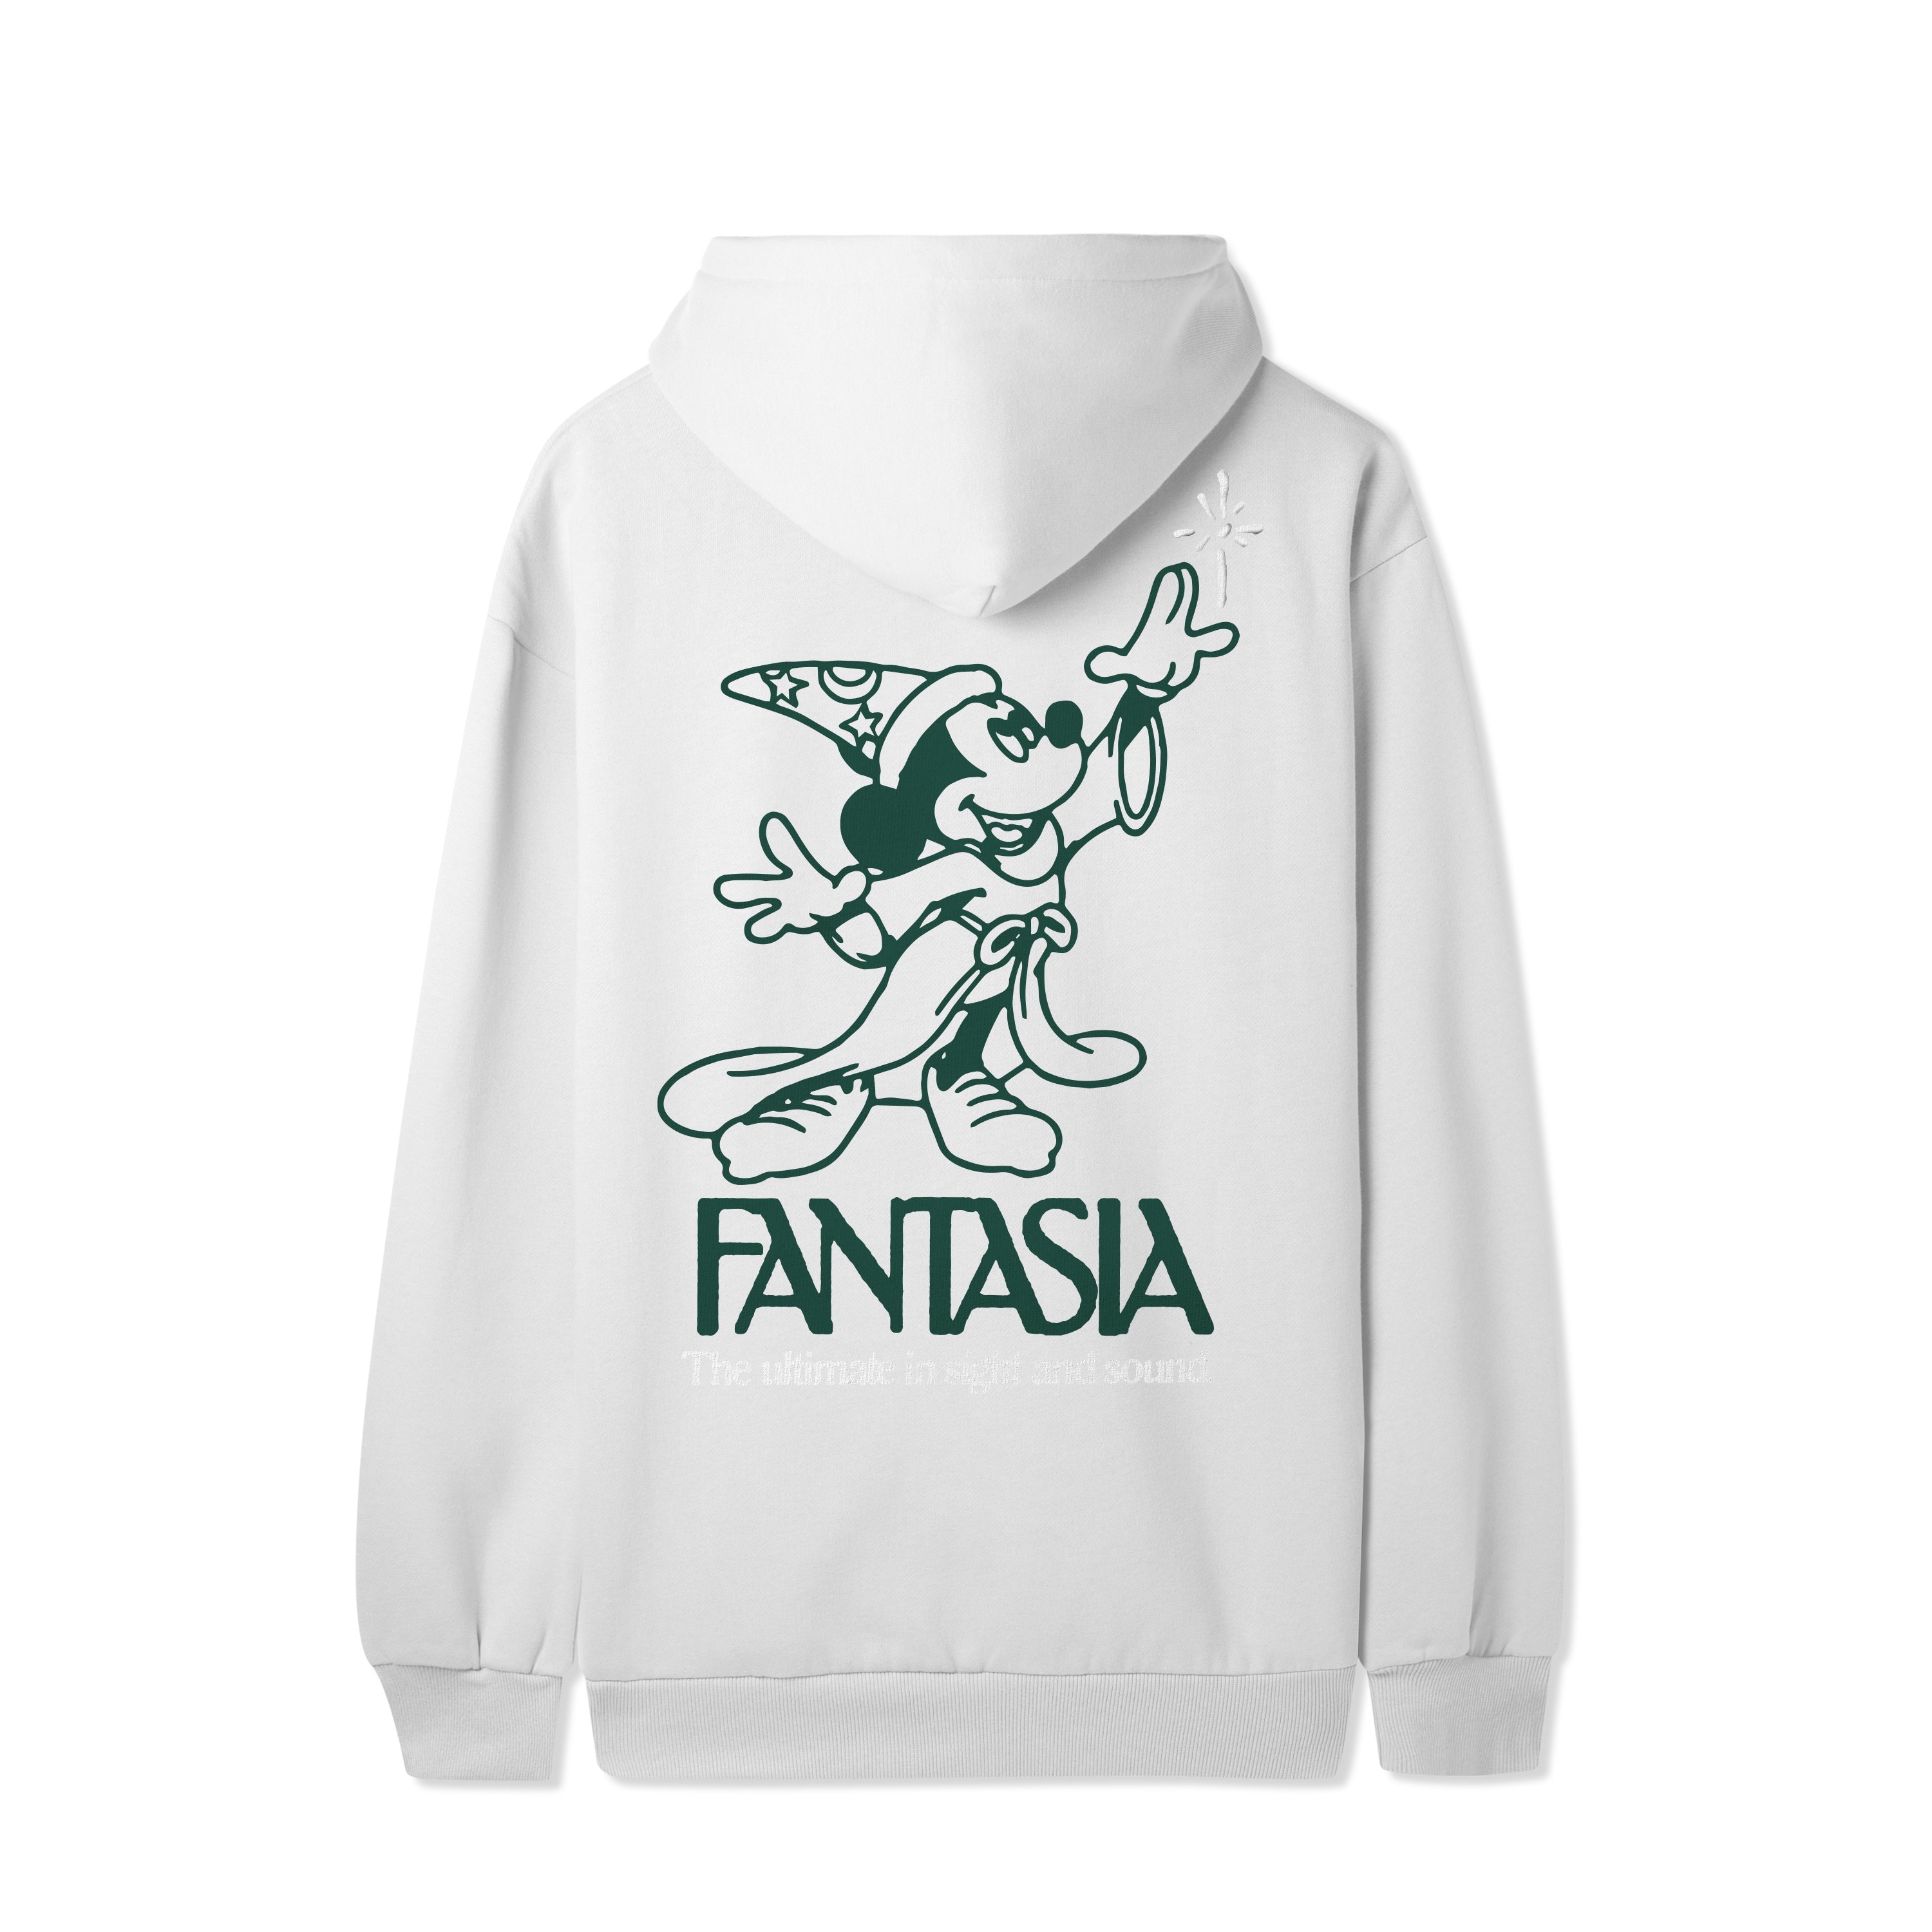 Butter Goods x Fantasia Sight & Sound Hooded Sweatshirt - Cement